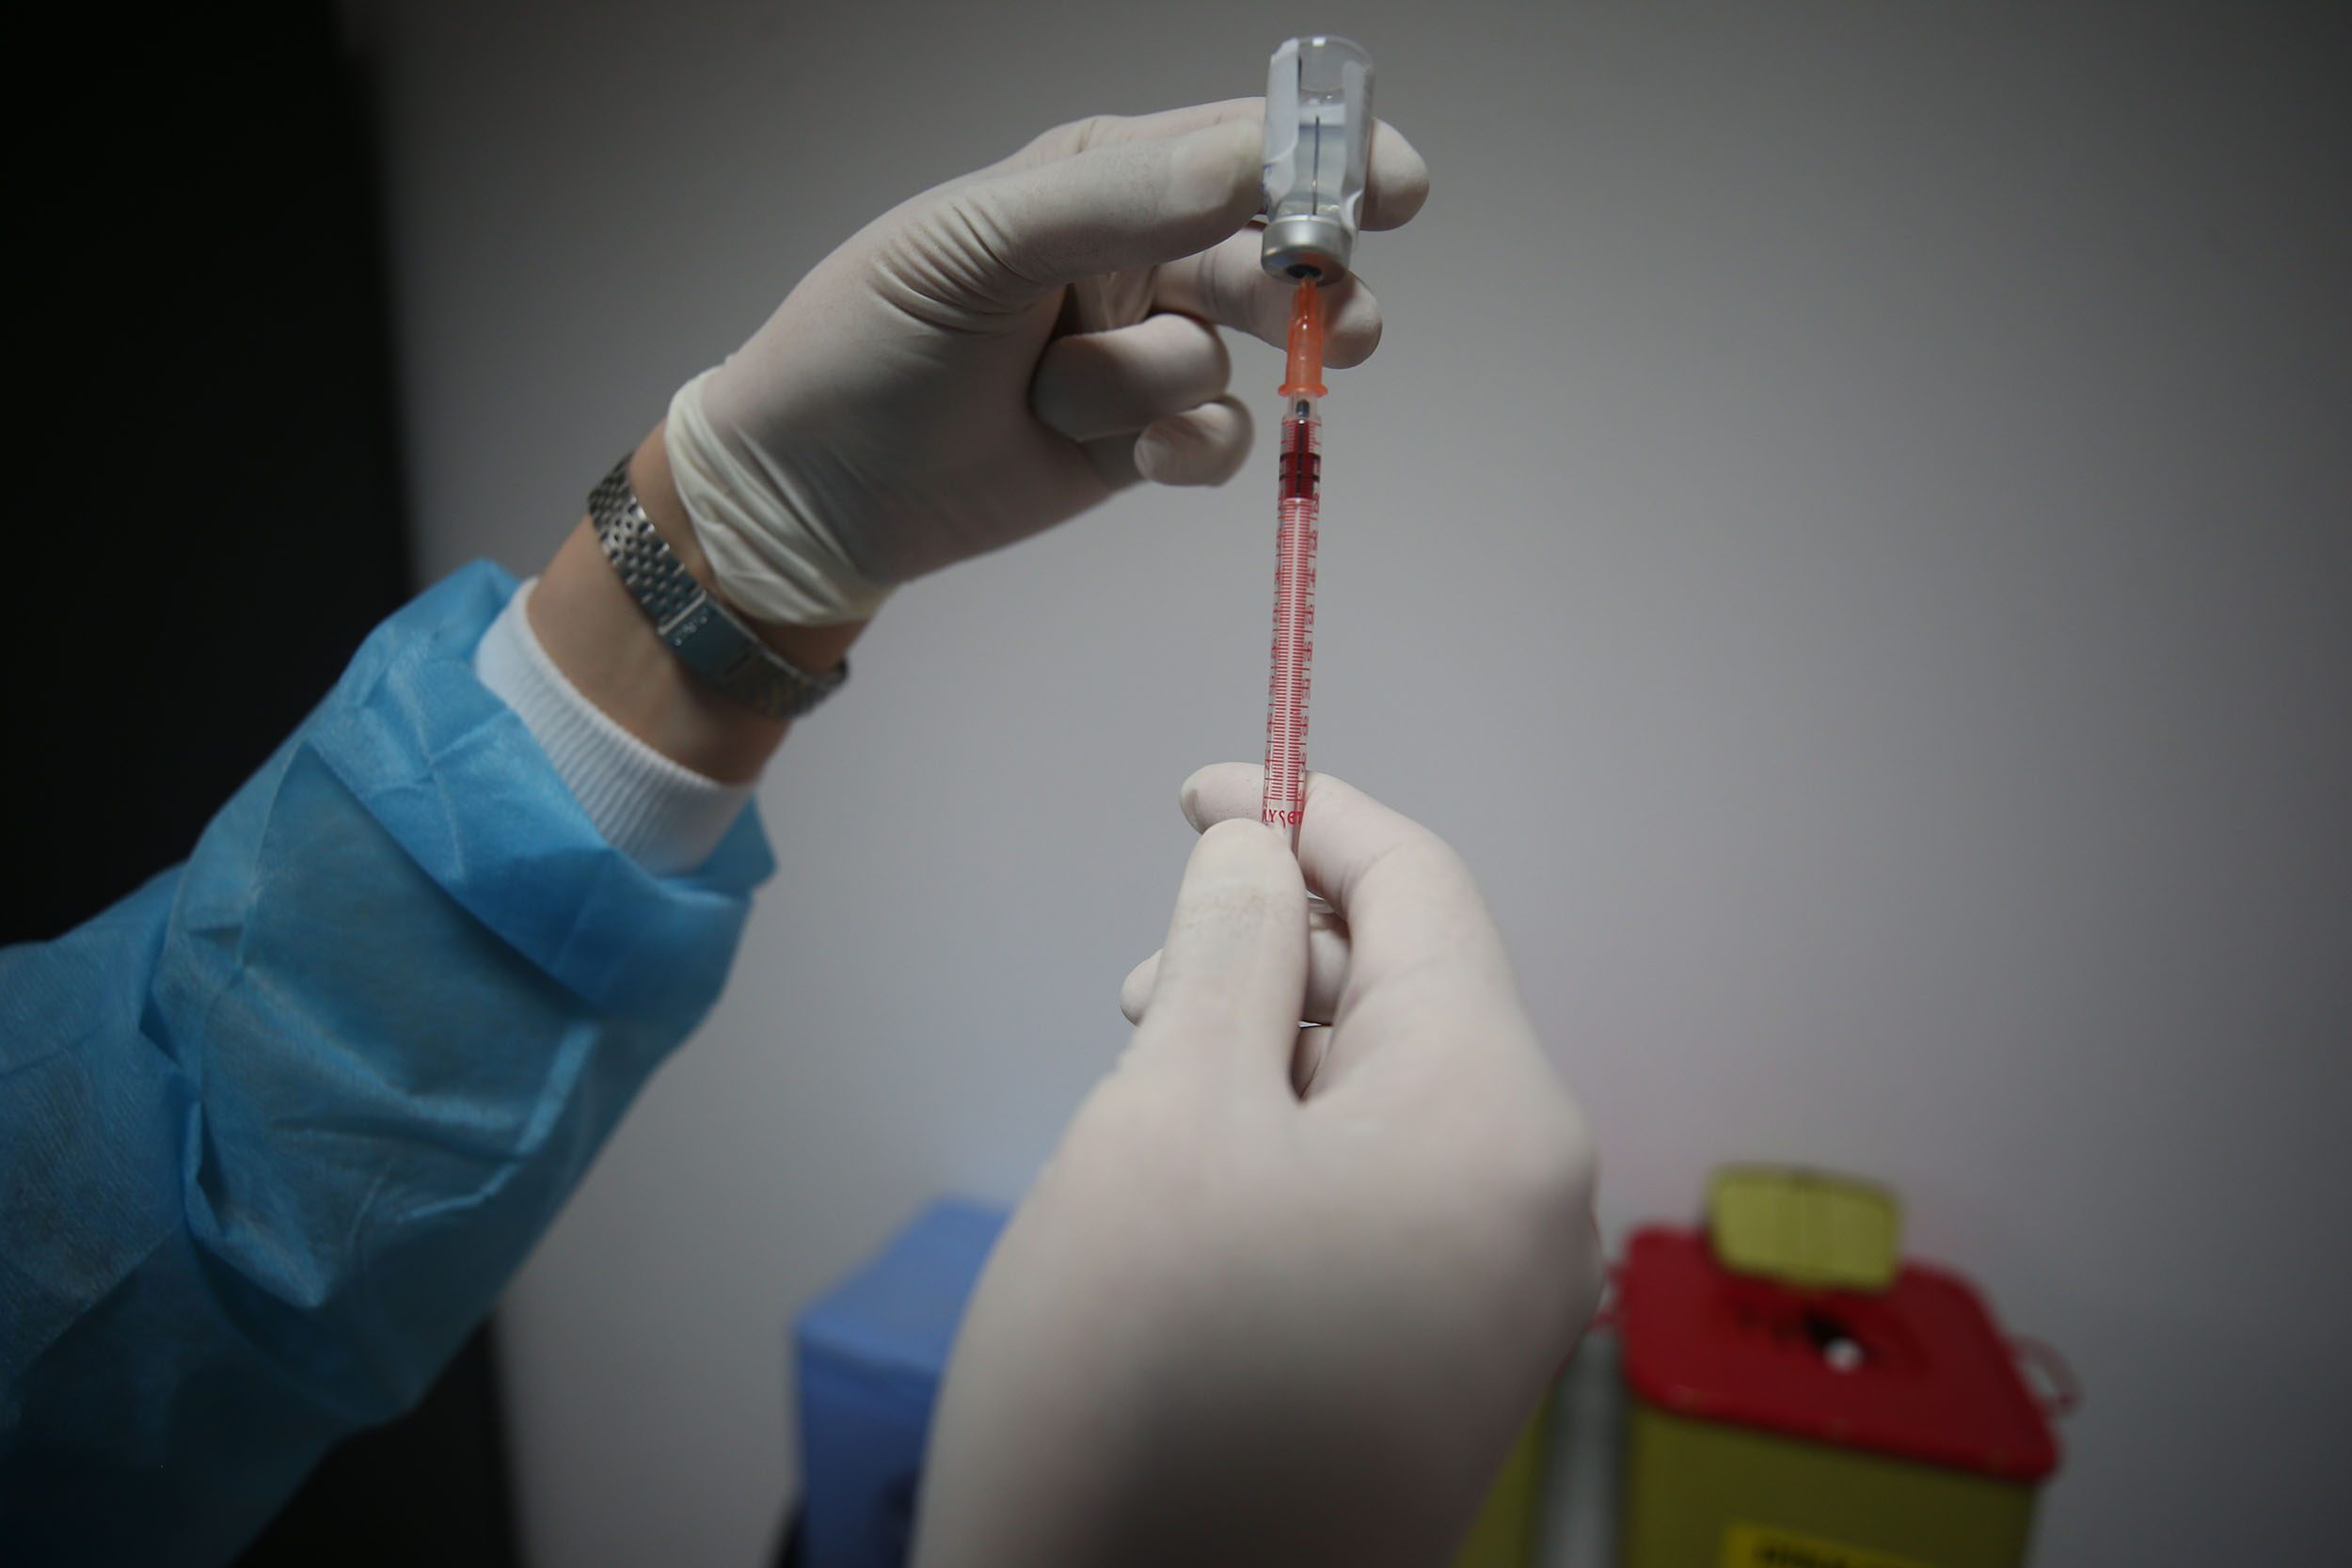 Turkey administers 96 million COVID-19 vaccines